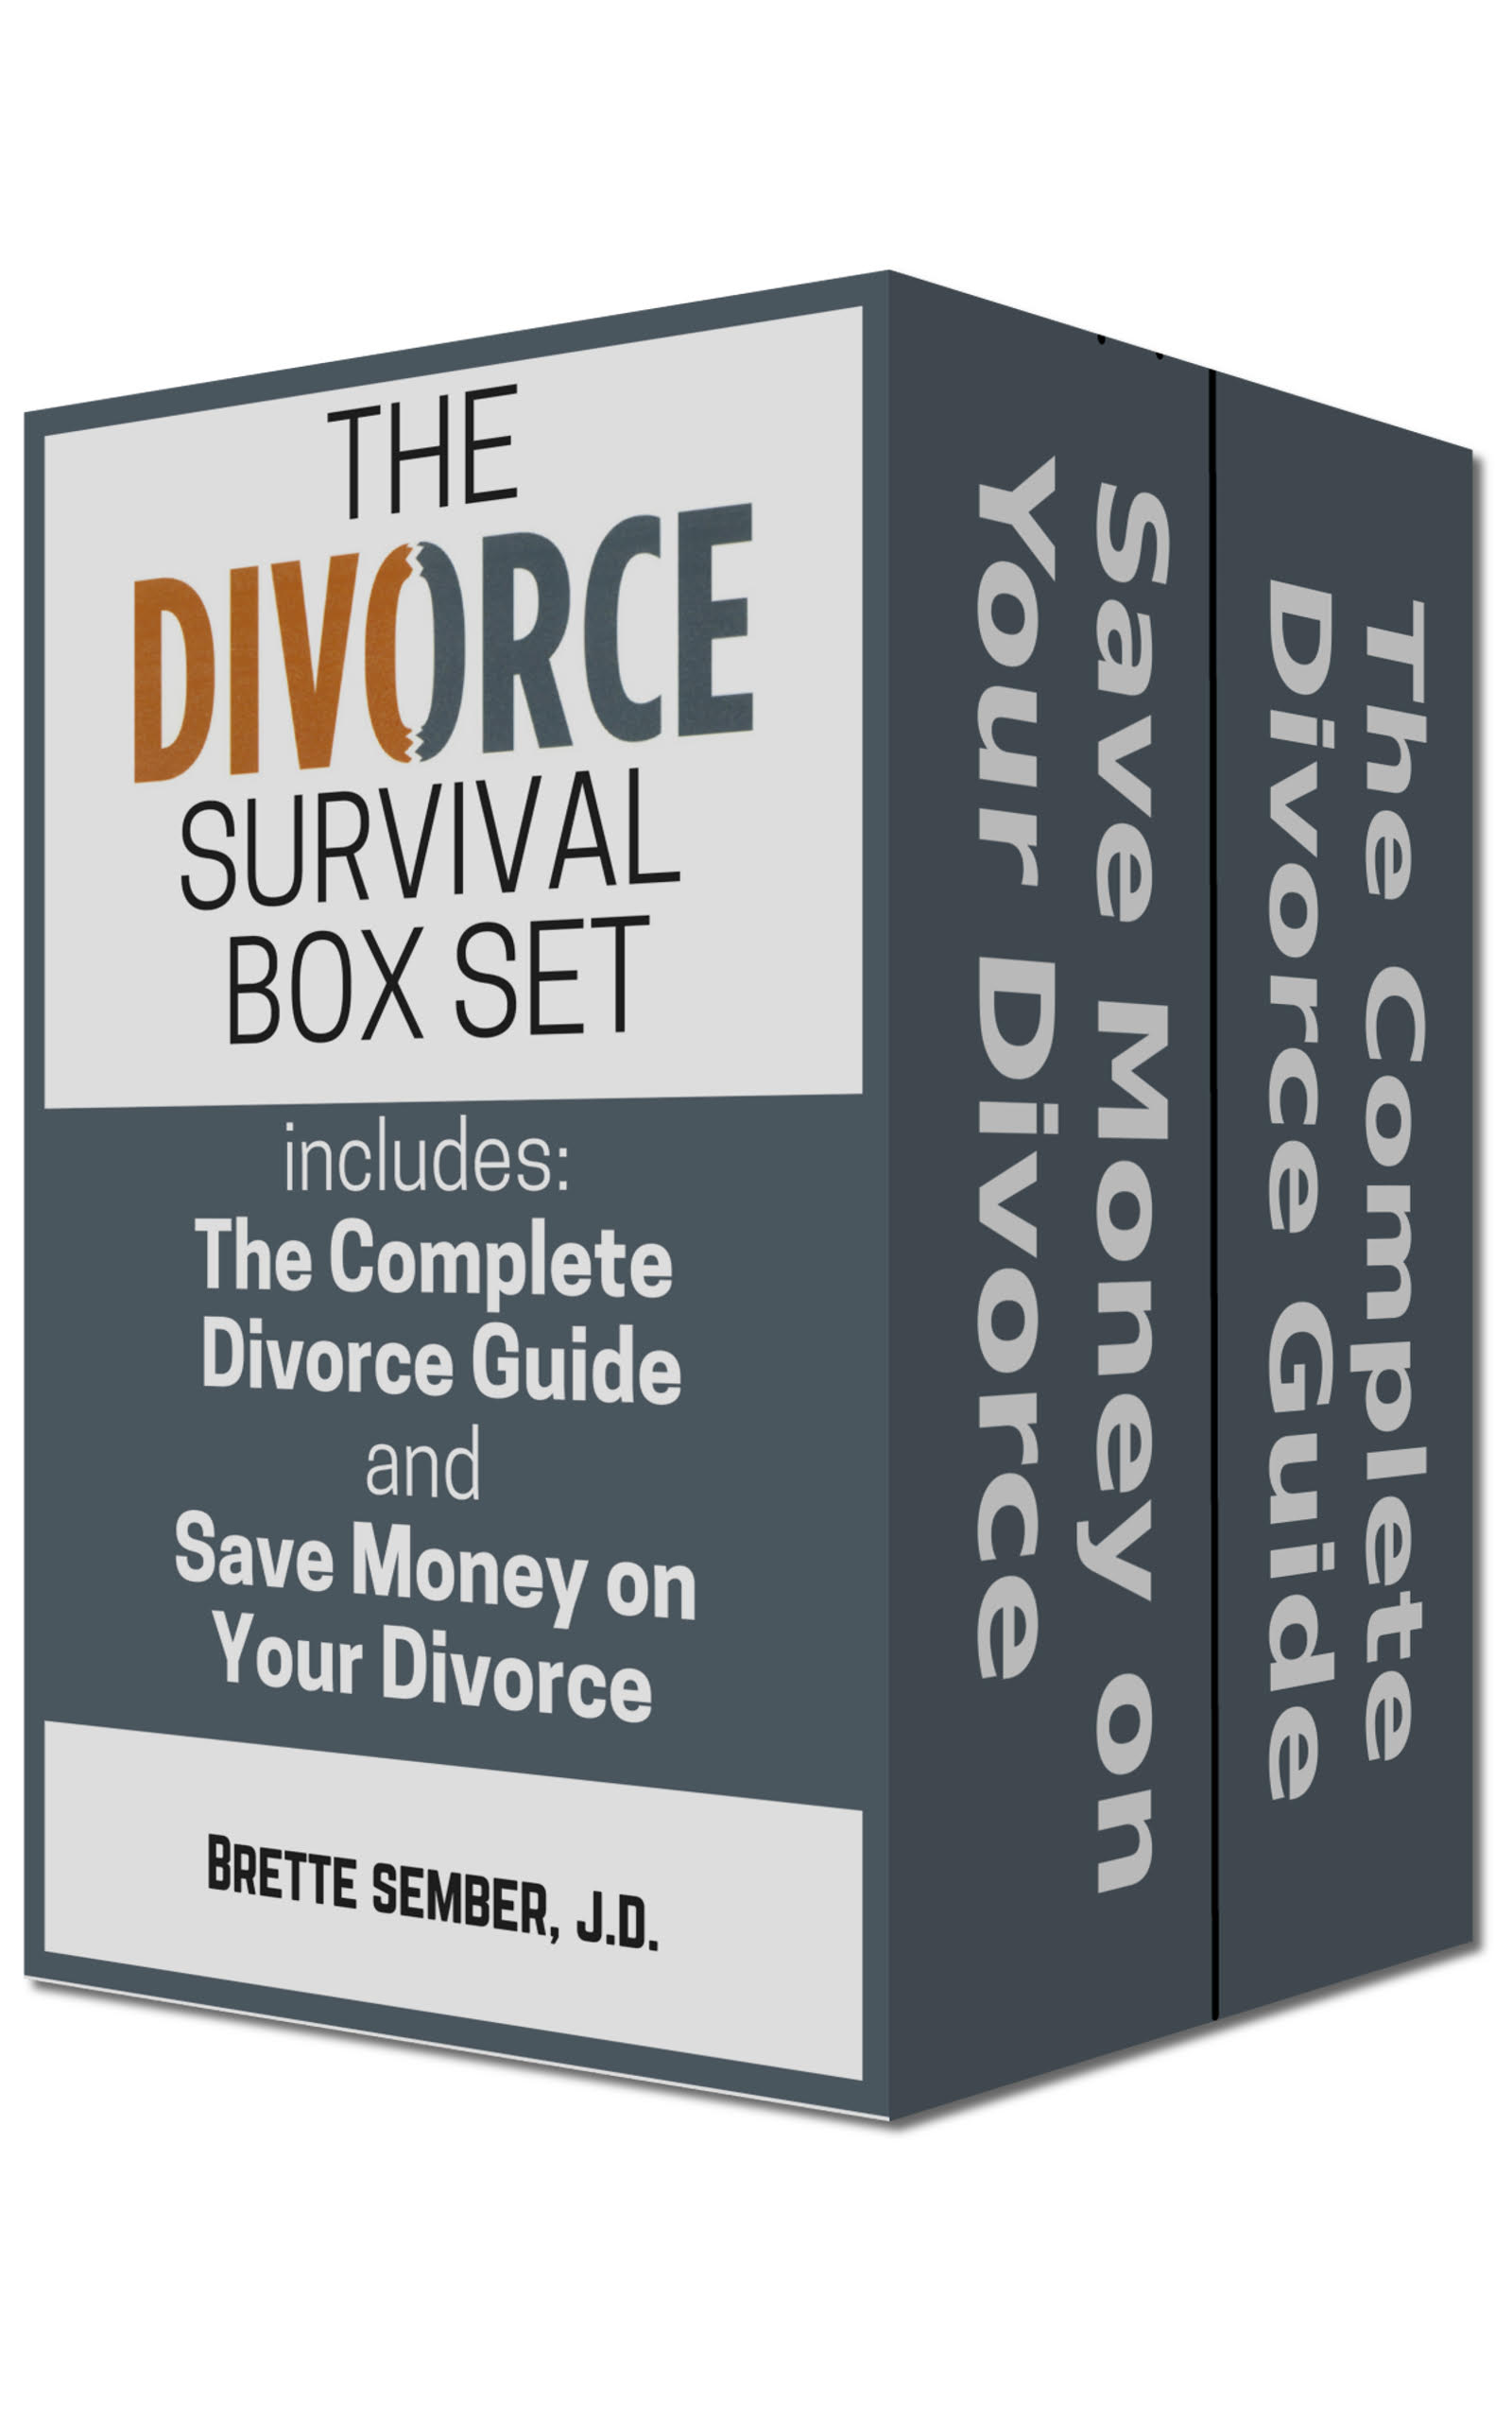 The Divorce Survival Box Set by Brette Sember